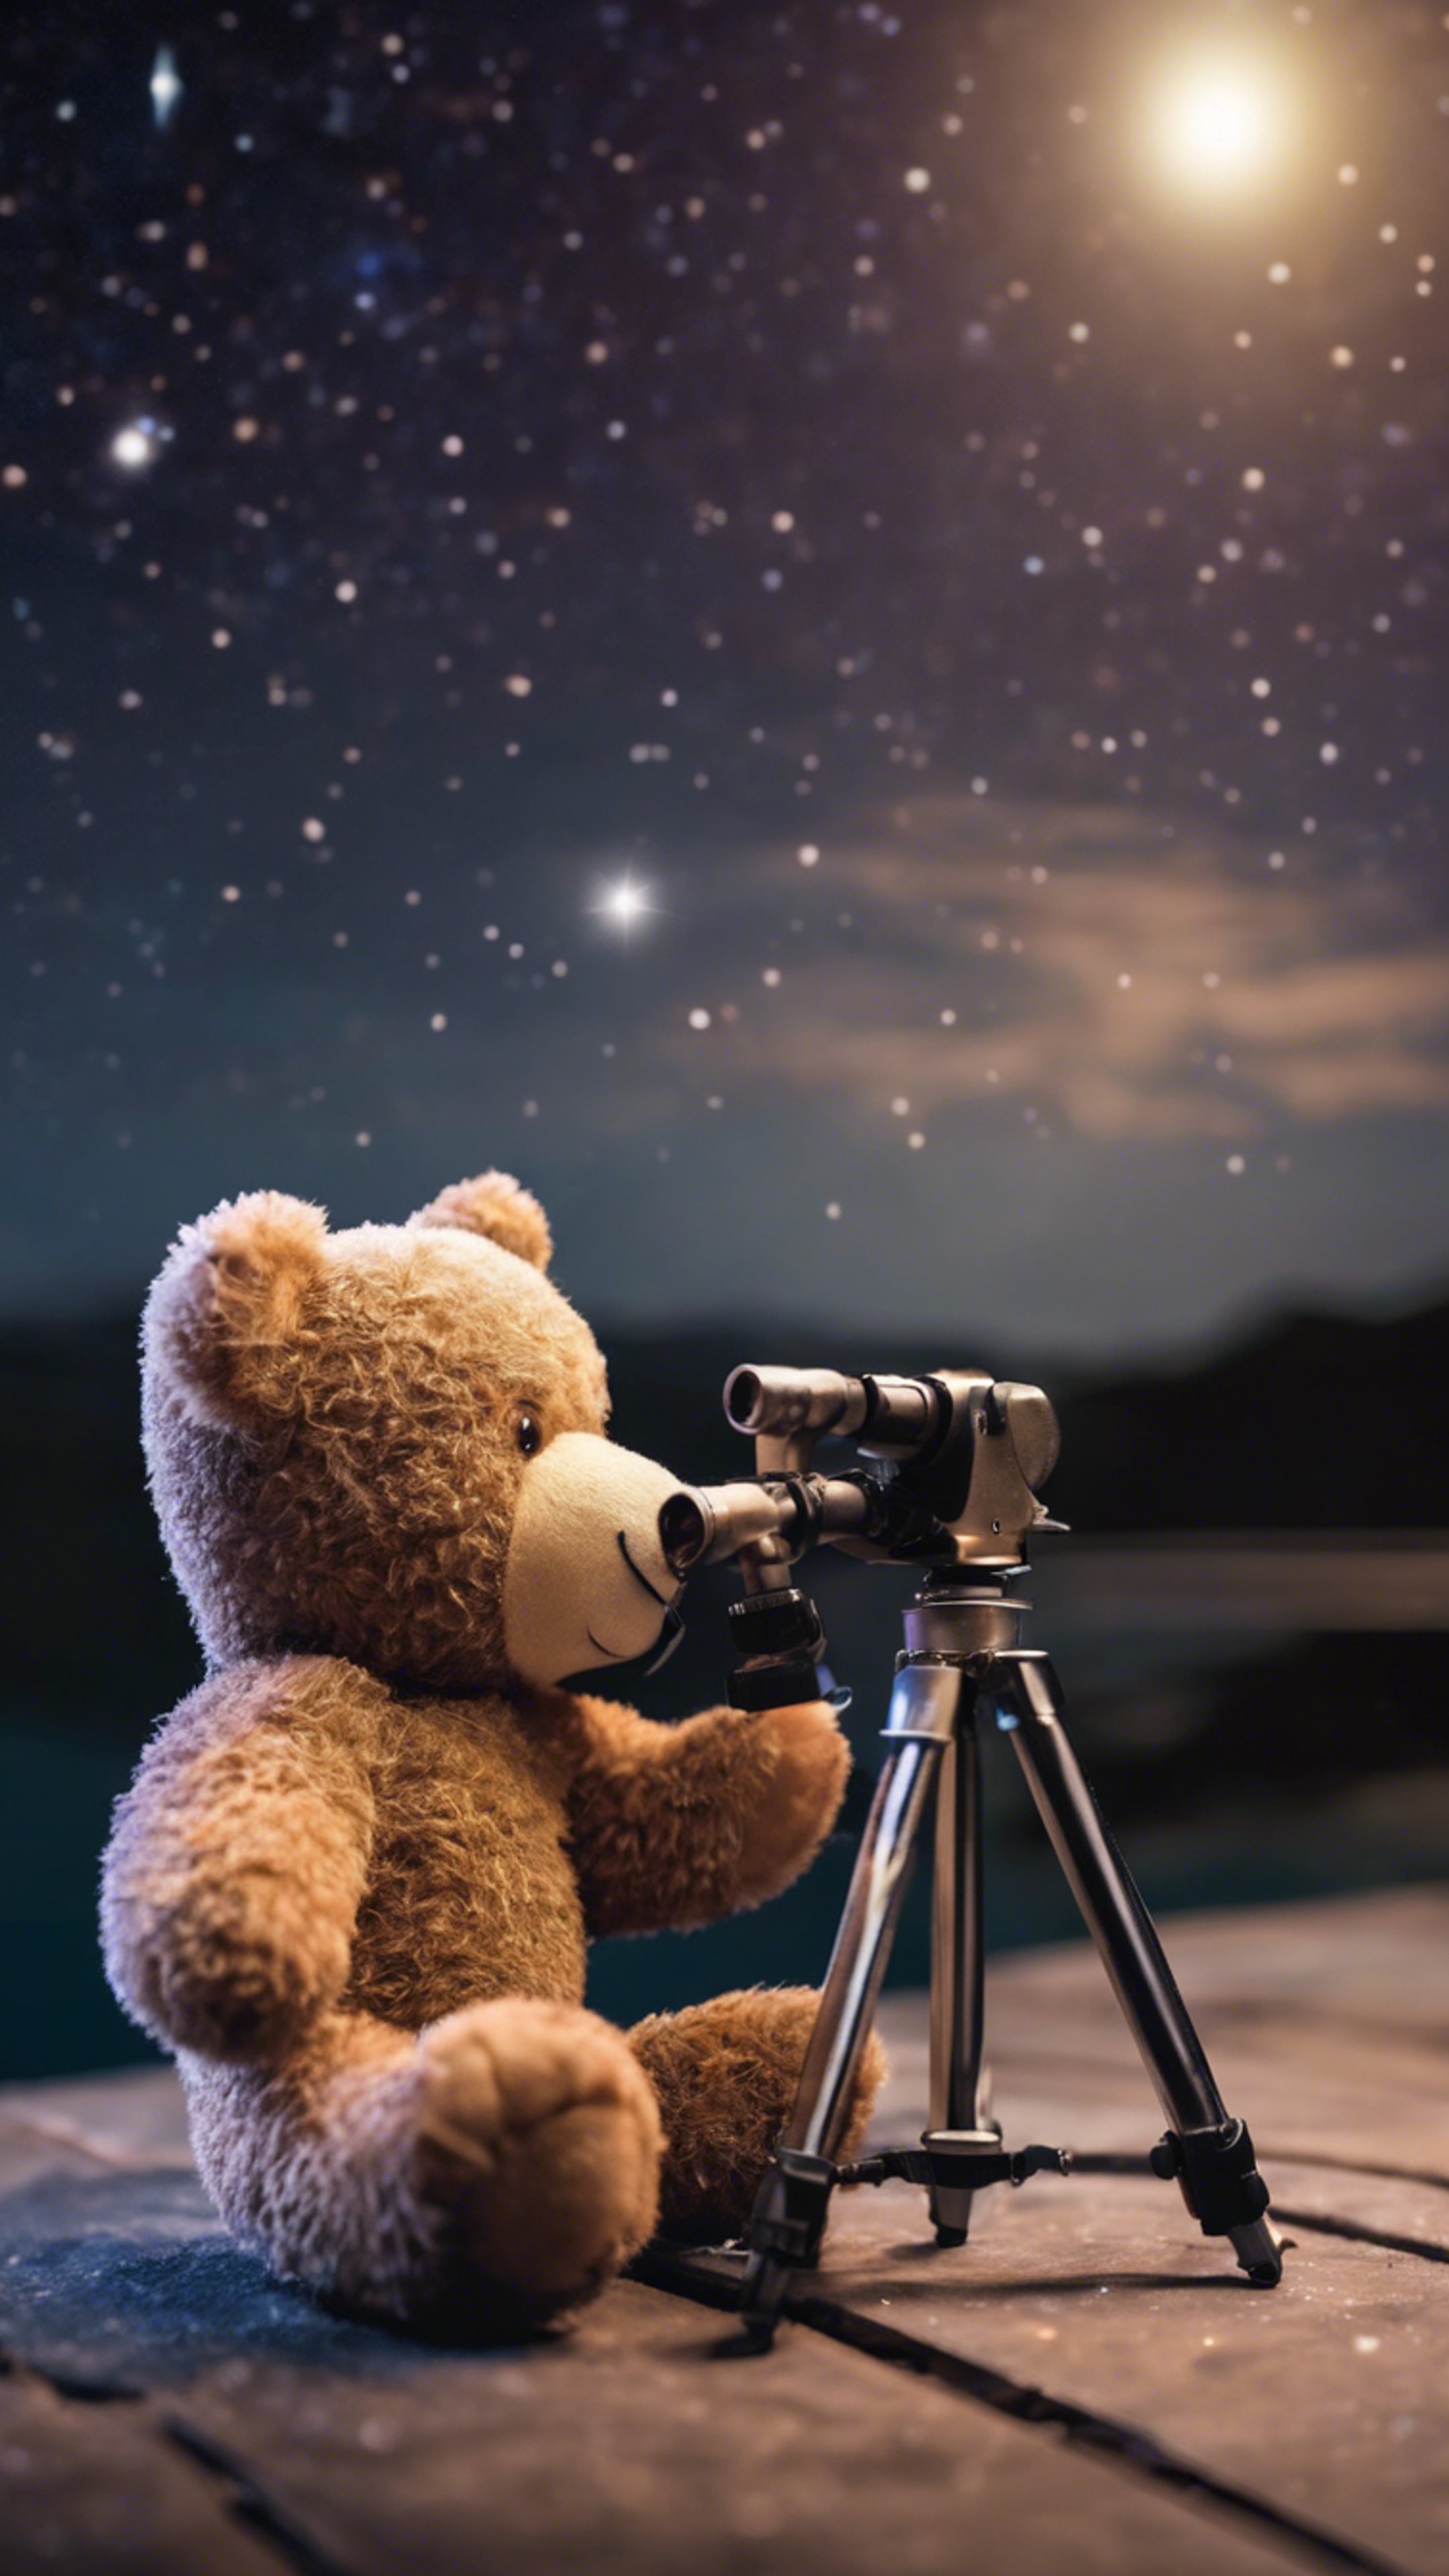 A teddy bear stargazing with a tiny telescope in a calm, clear night.壁紙[9f6781f4ef104e0c80aa]